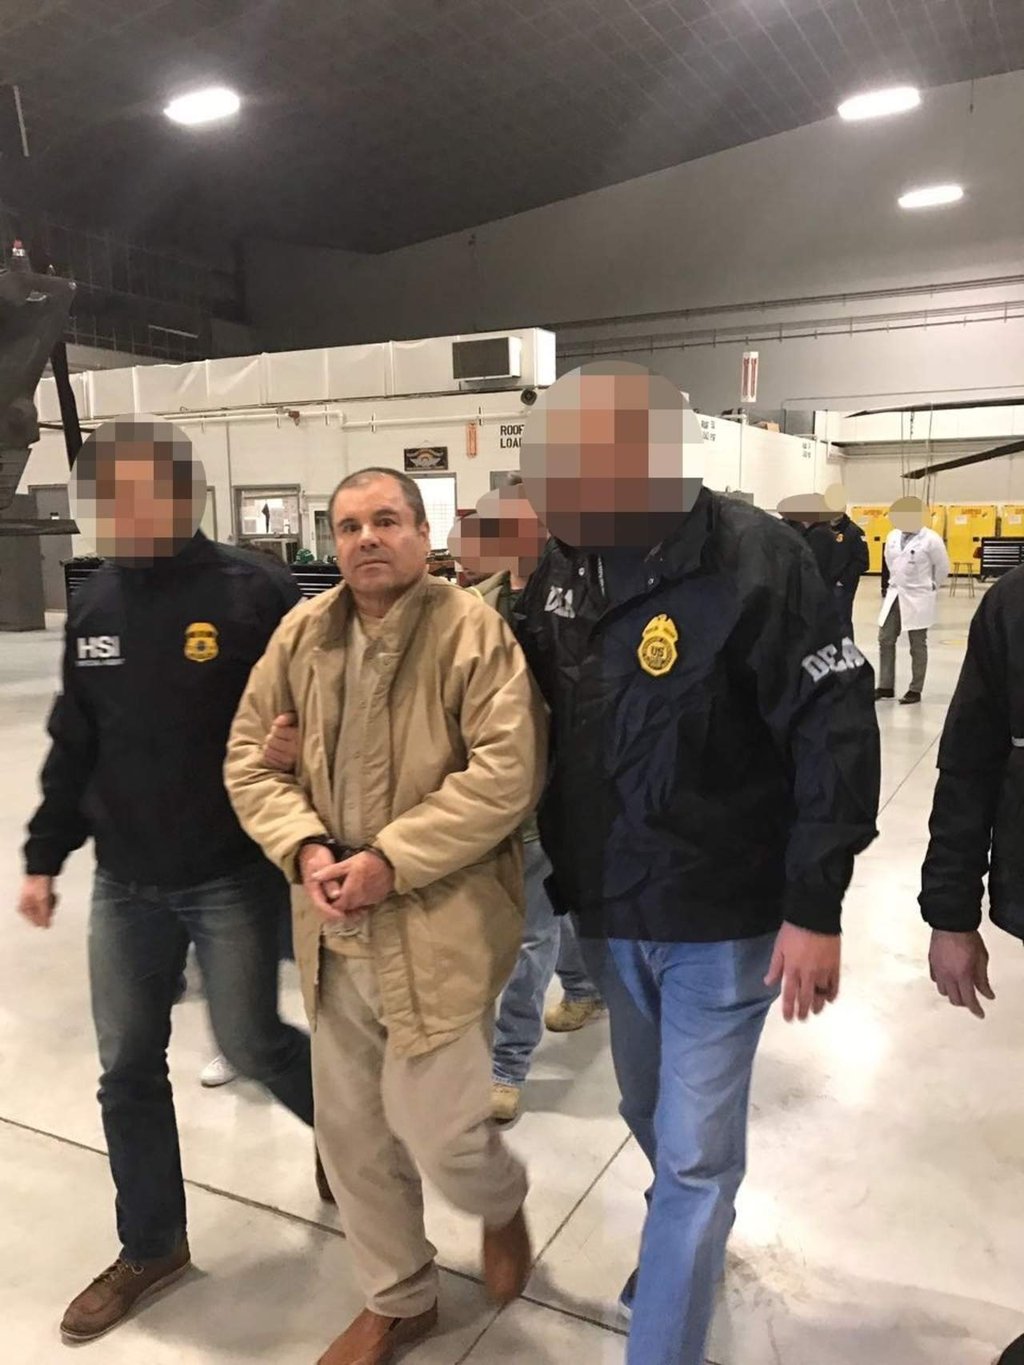 Dan ultimátum a pesquisa sobre presunta tortura del caso 'Chapo' Guzmán